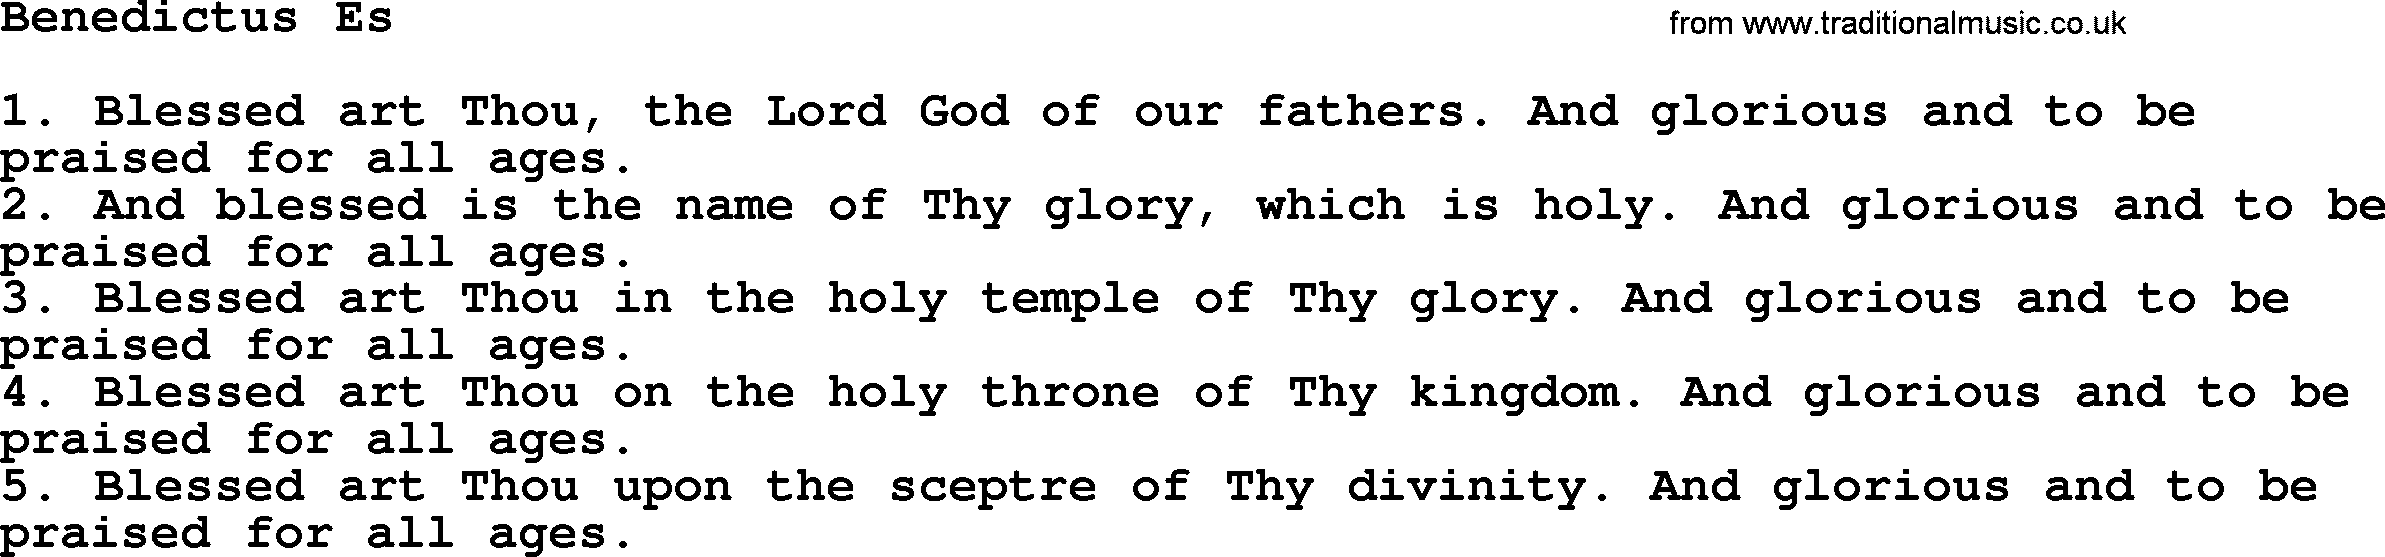 Catholic Hymn: Benedictus Es lyrics with PDF